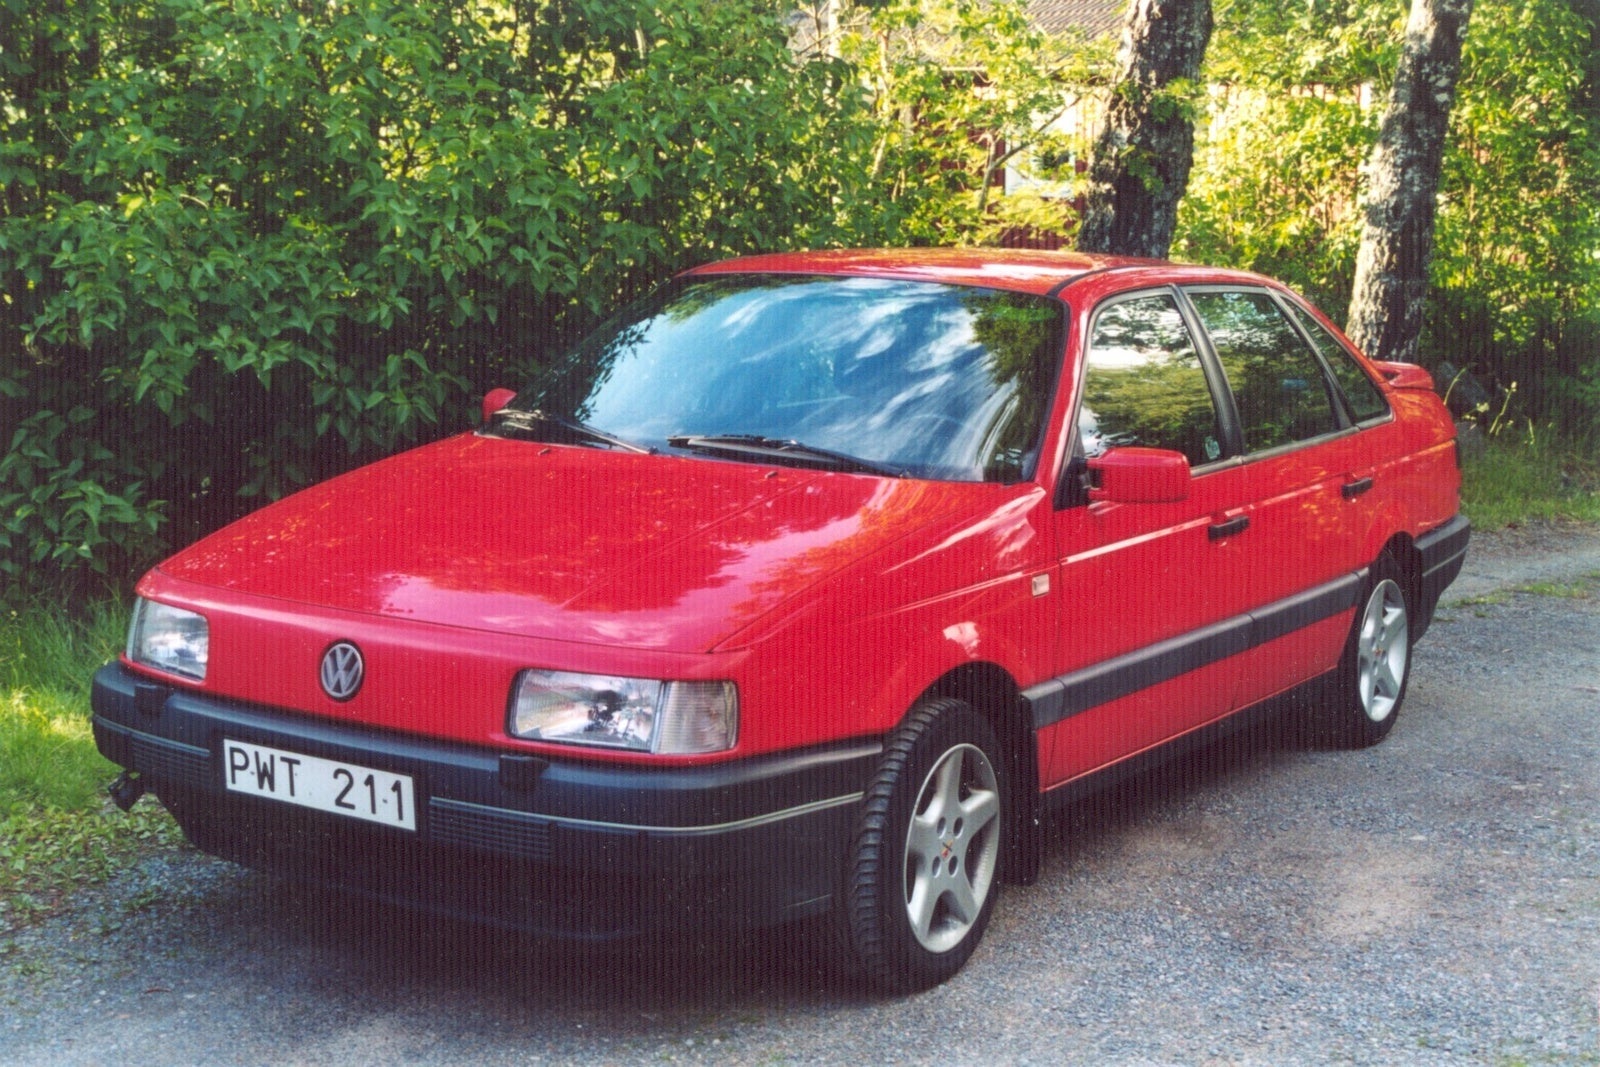 Volkswagen 1993. Volkswagen Passat b3 седан красный. Фольксваген Пассат 1993. Фольксваген Пассат 1993 красный. Фольксваген Пассат б3 1993.